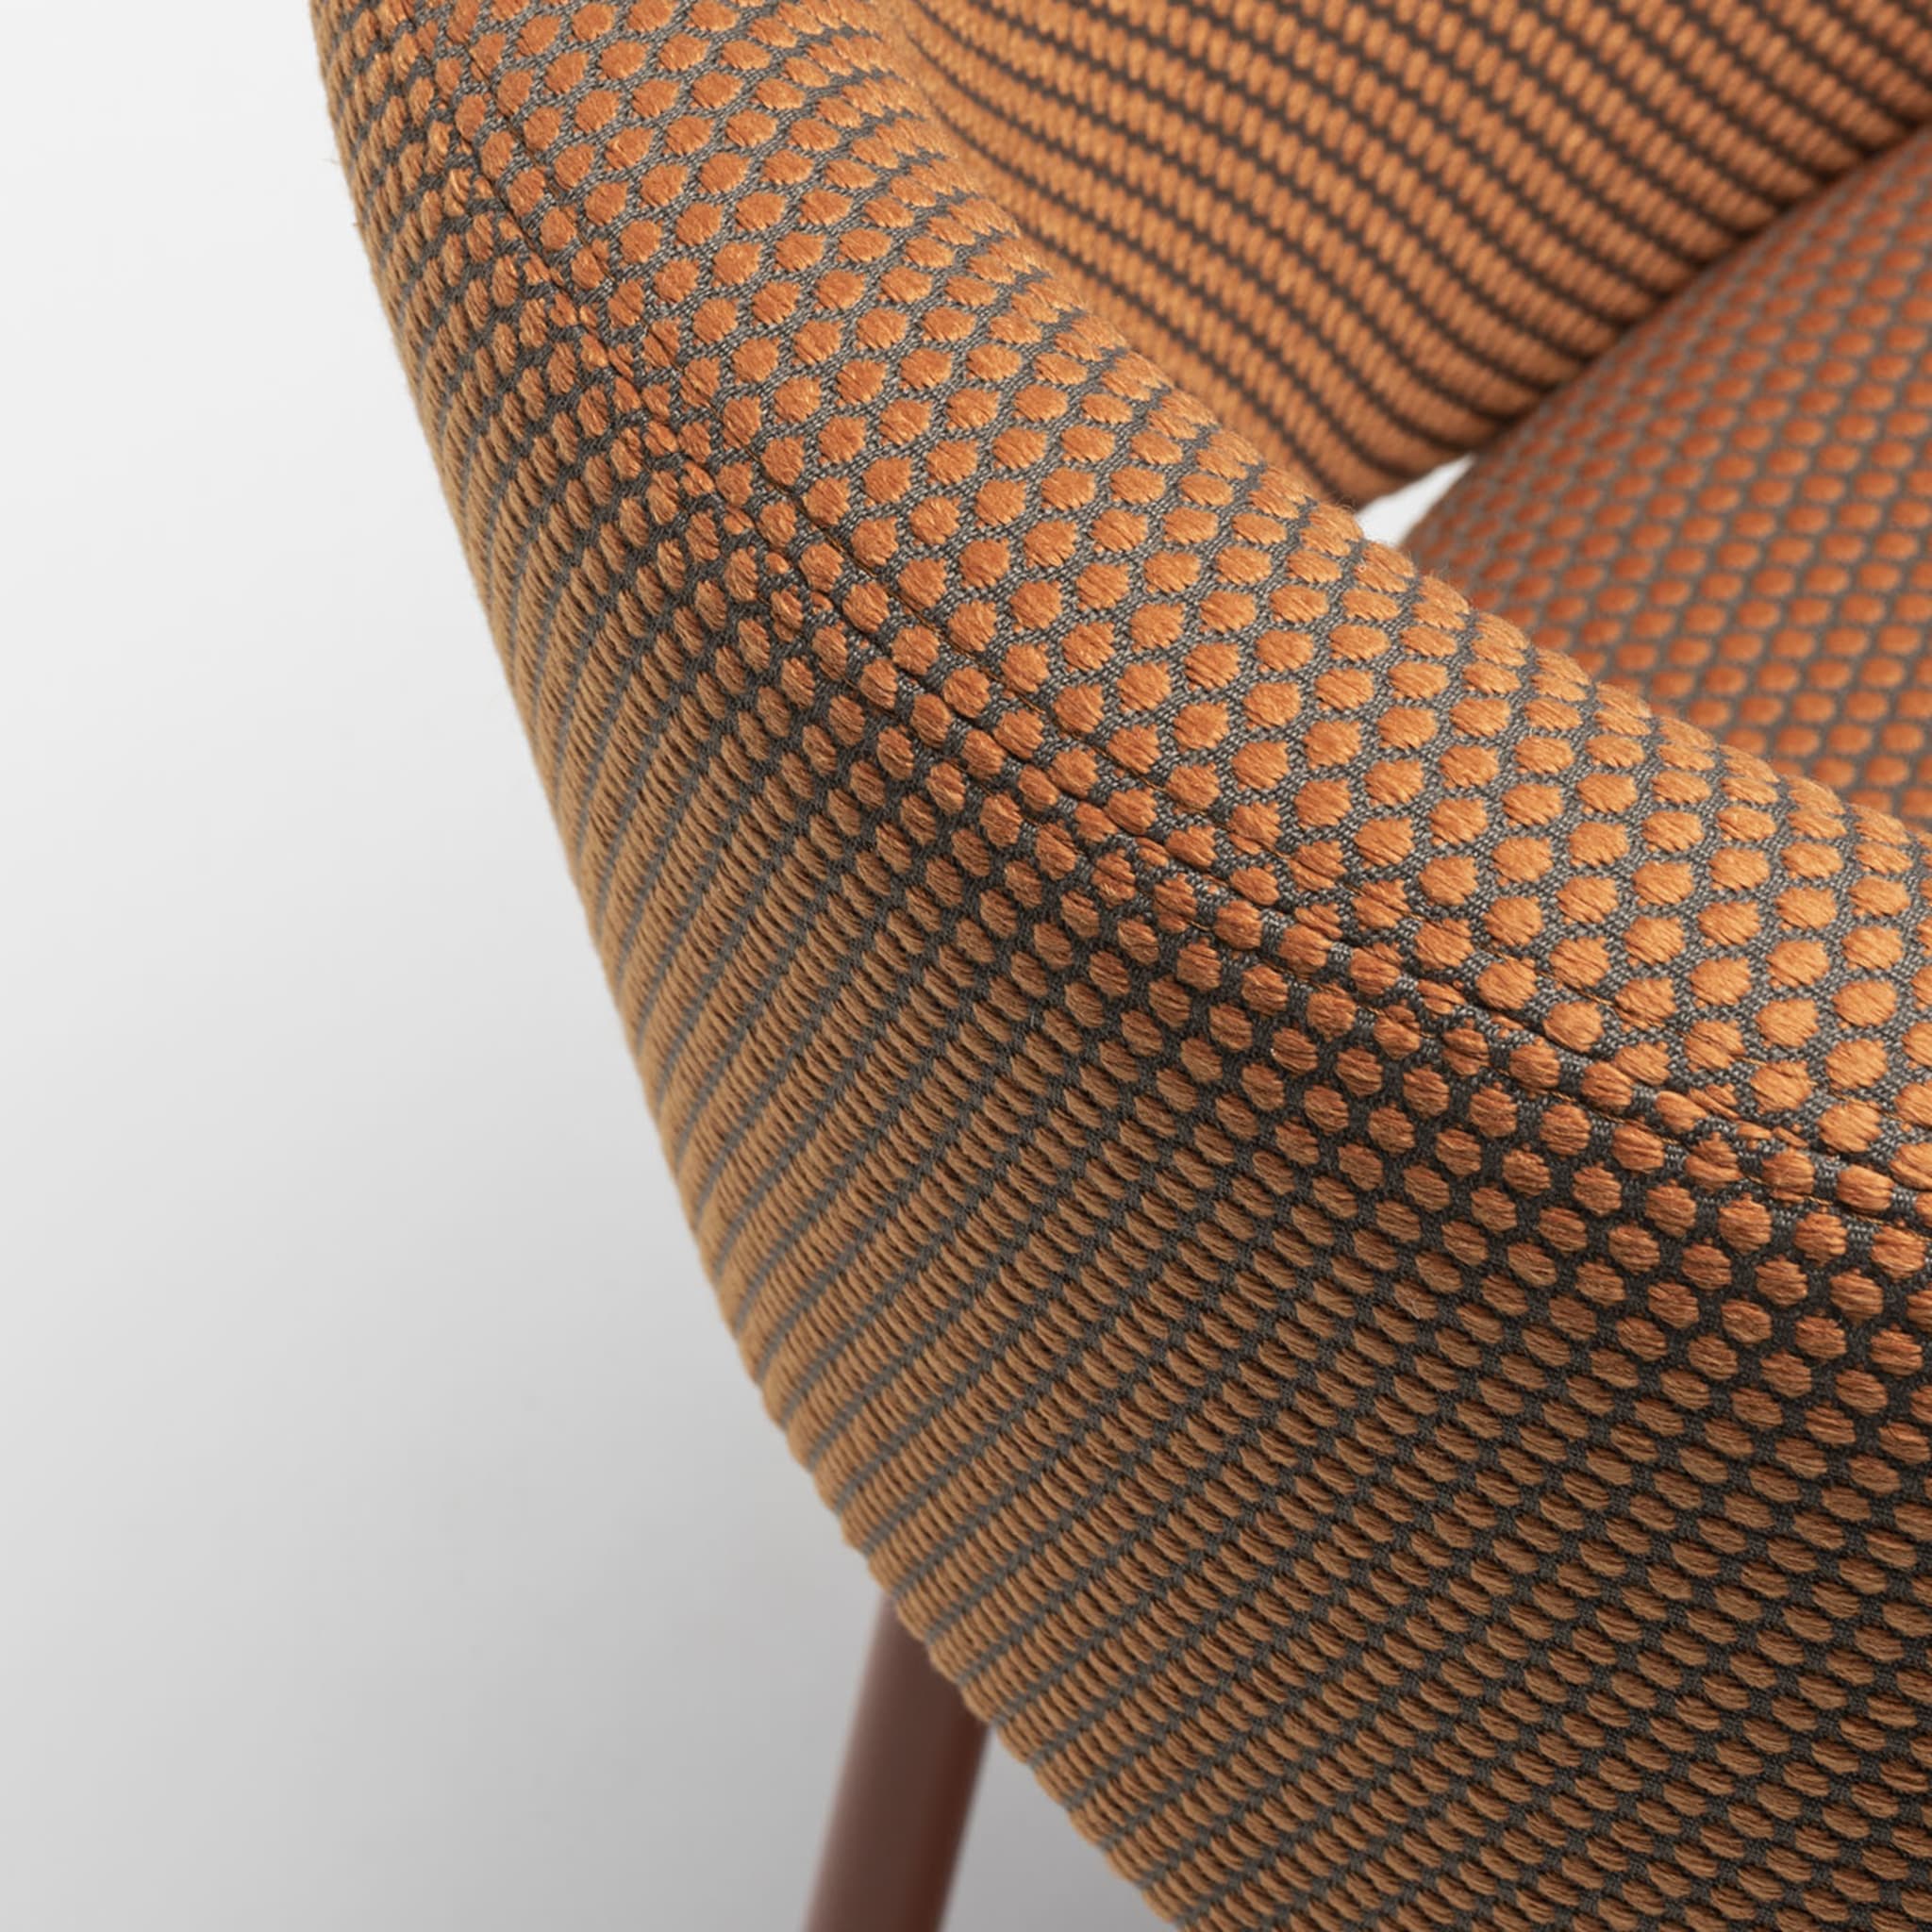 Bel M Terracotta Chair By Pablo Regano - Alternative view 1